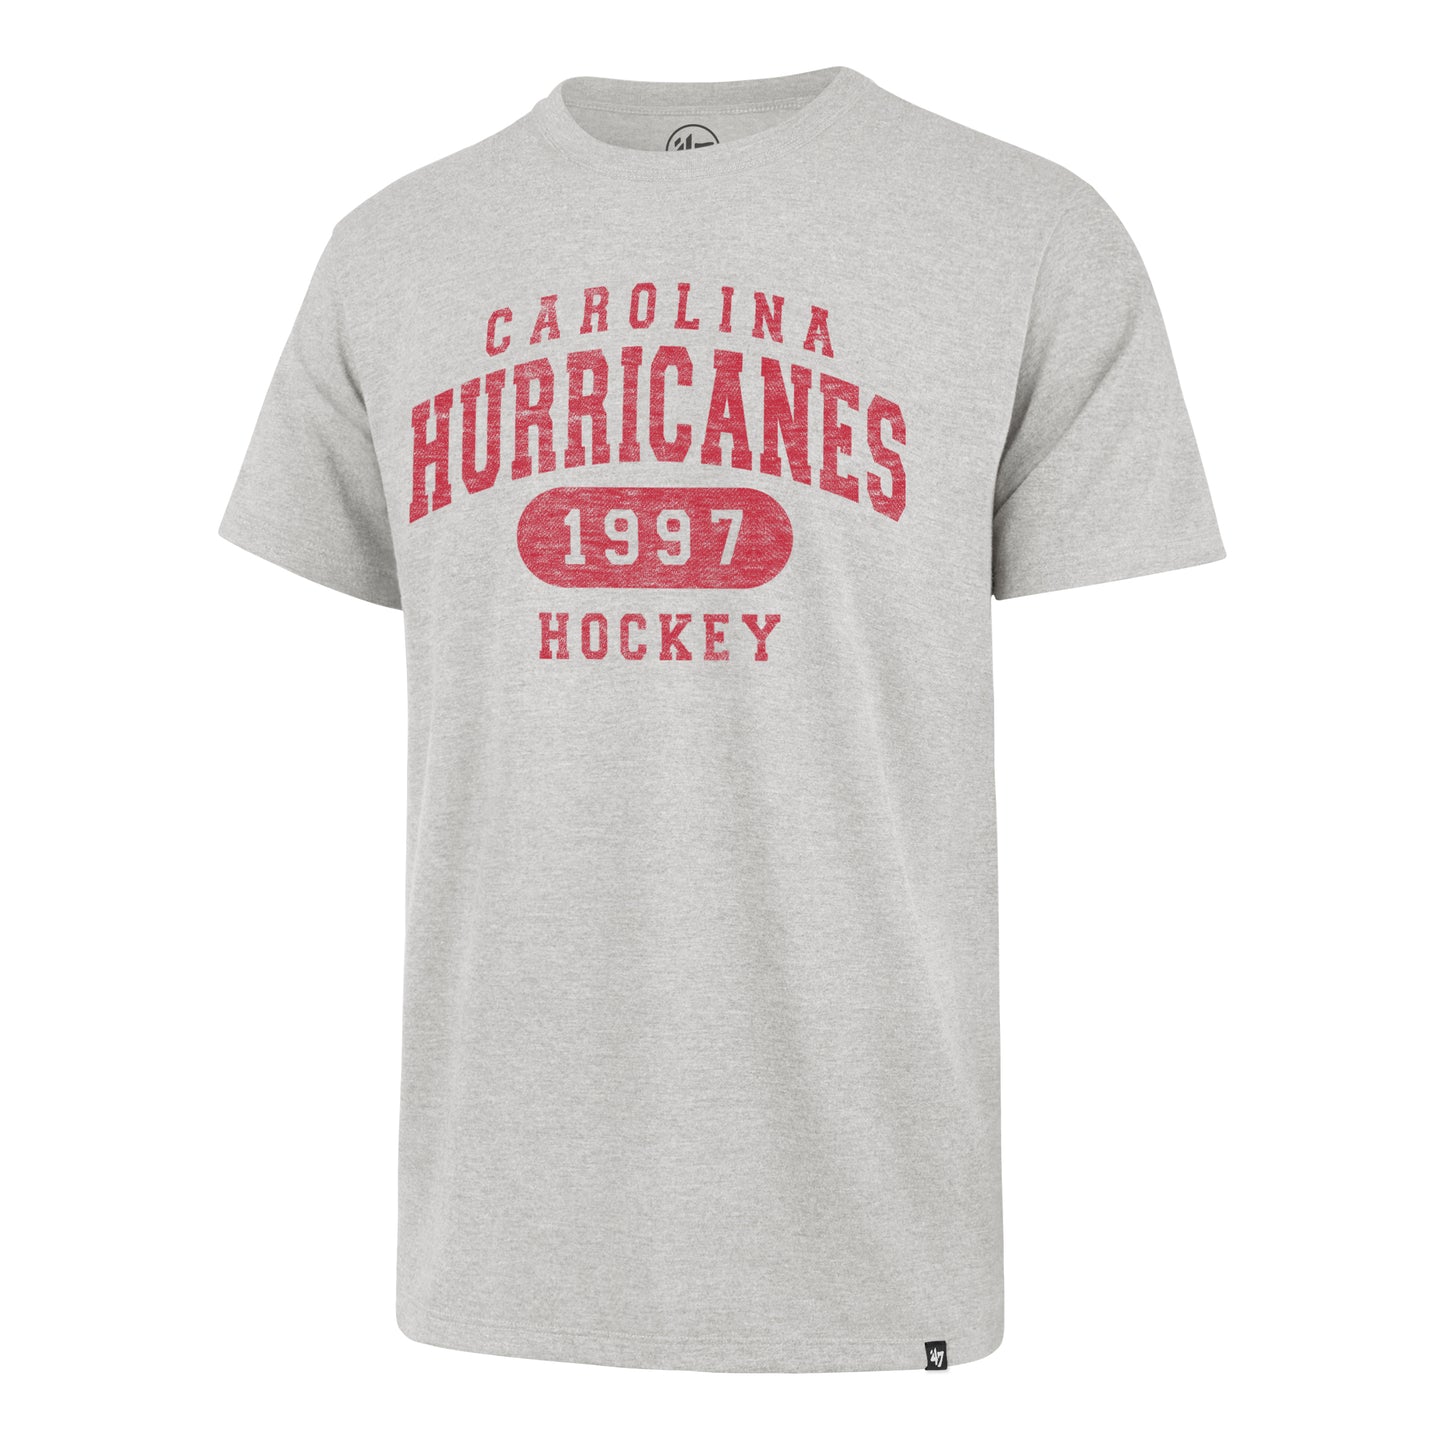 Front: Grey shirt with red text "Carolina Hurricanes Hockey 1997 "